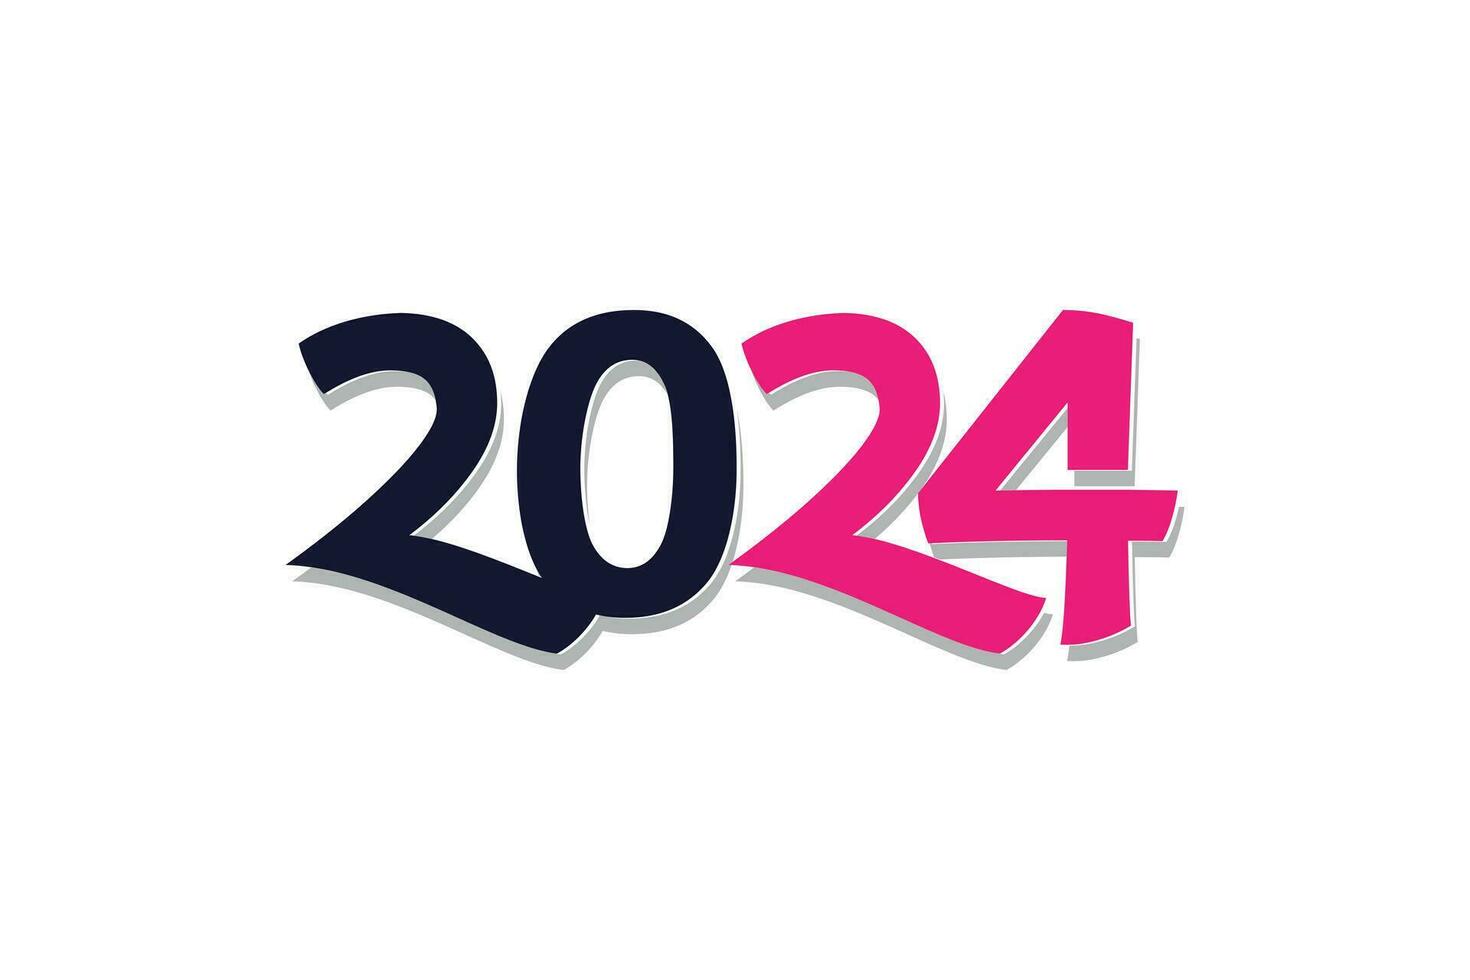 2024 logo design element vector with creative concept